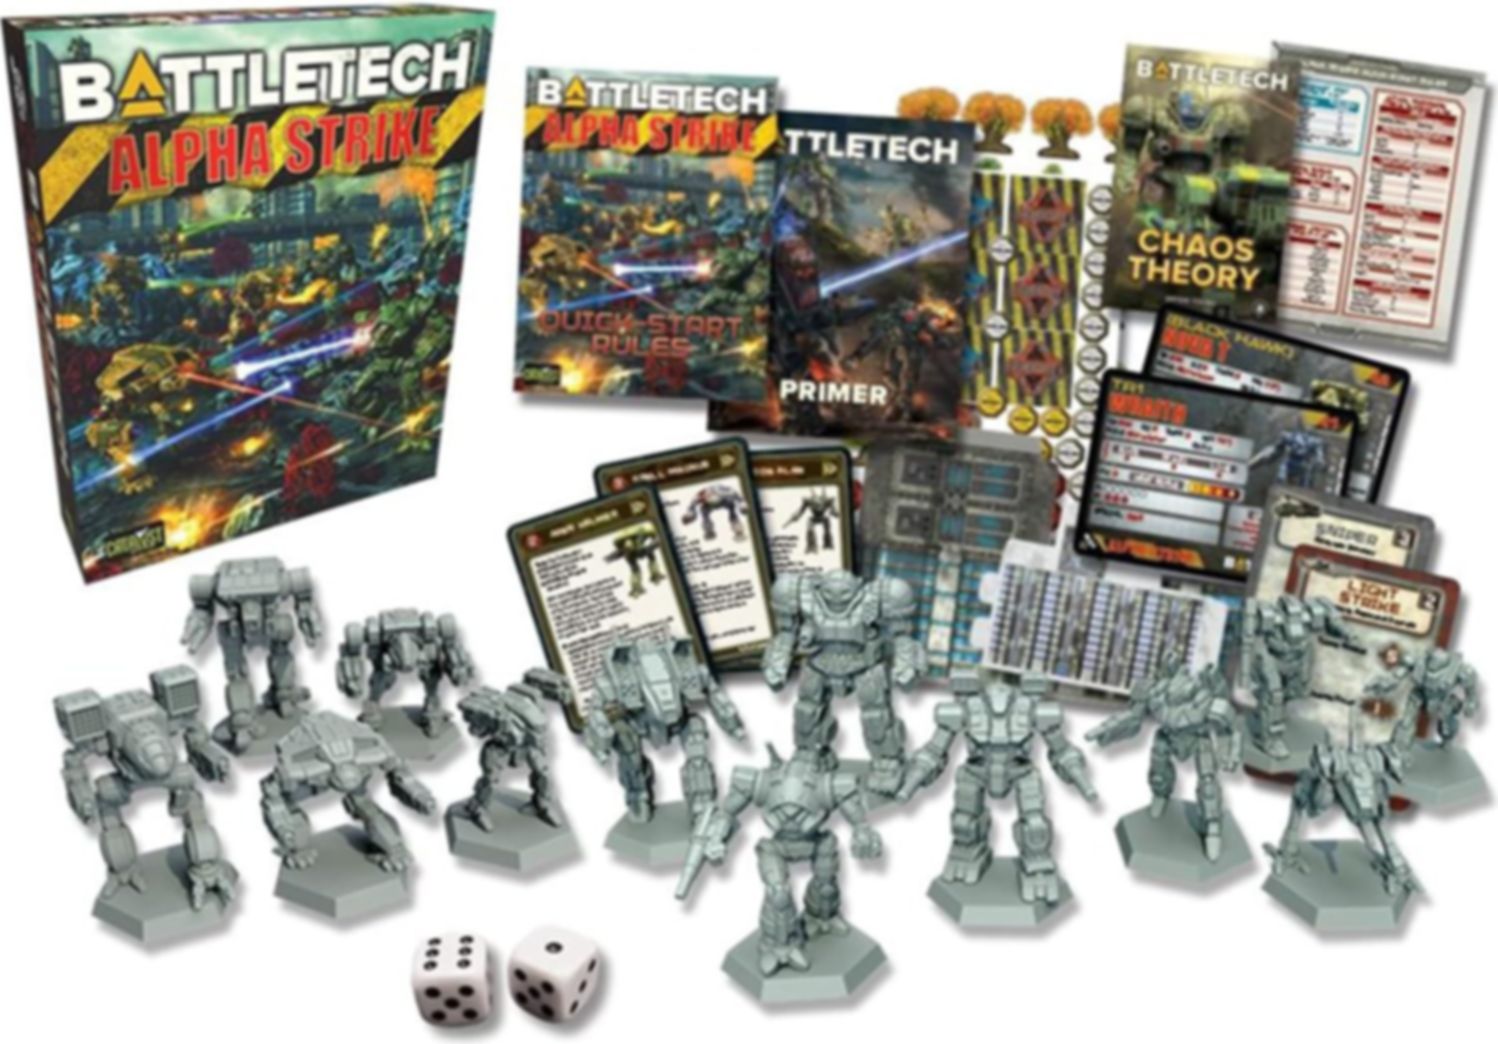 BattleTech: Alpha Strike Boxed Set components